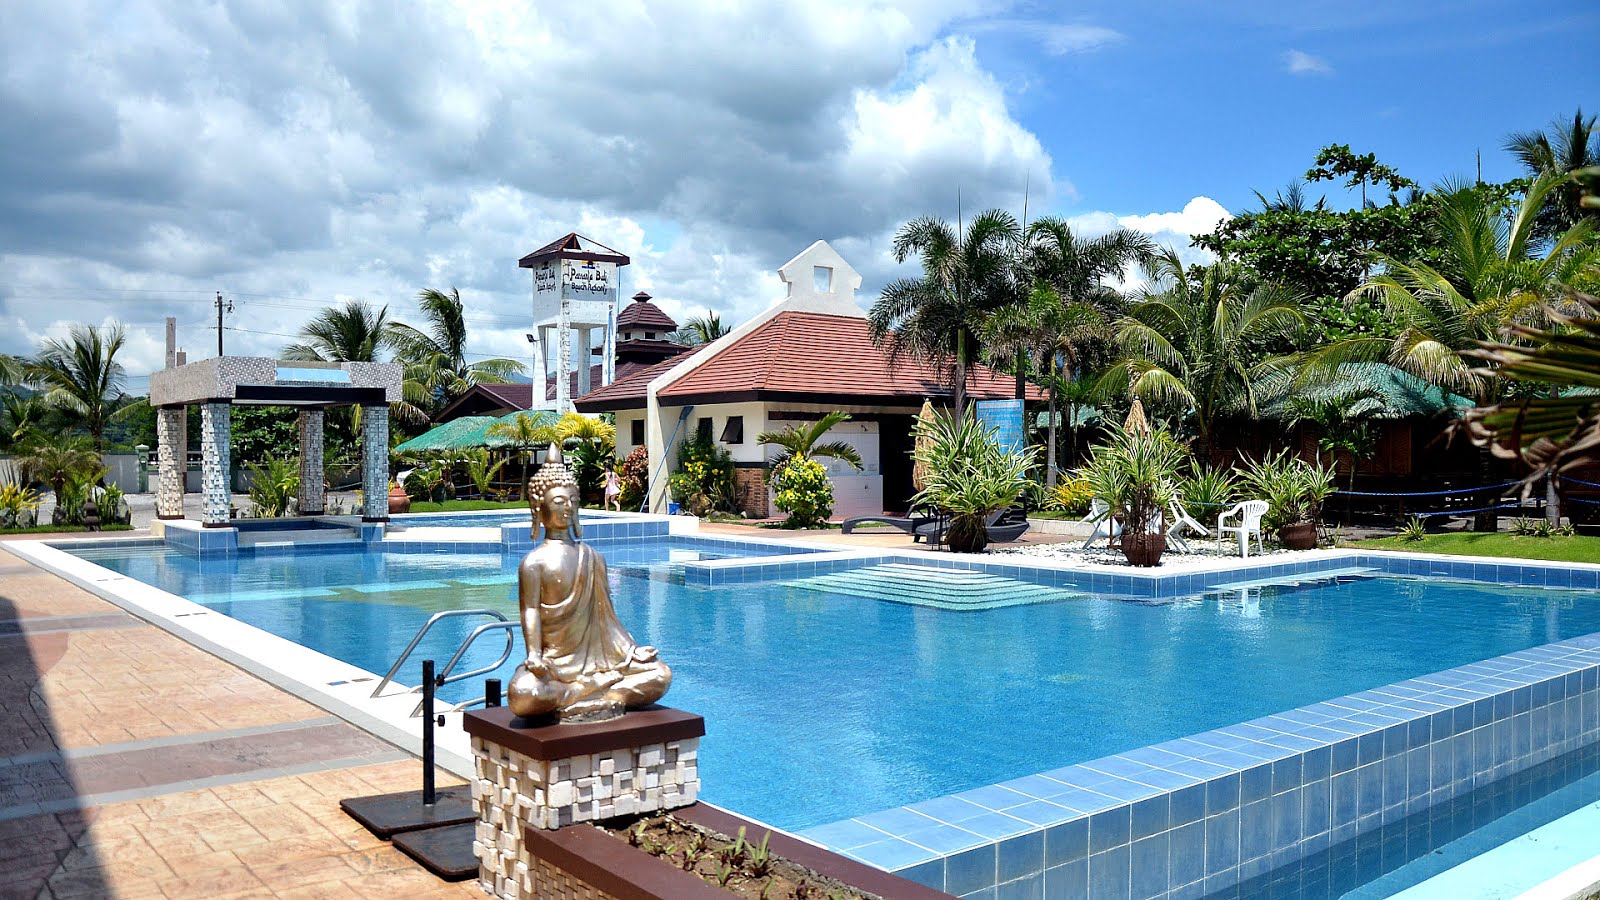 Bali Resorts On The Beach - Trip to Resort